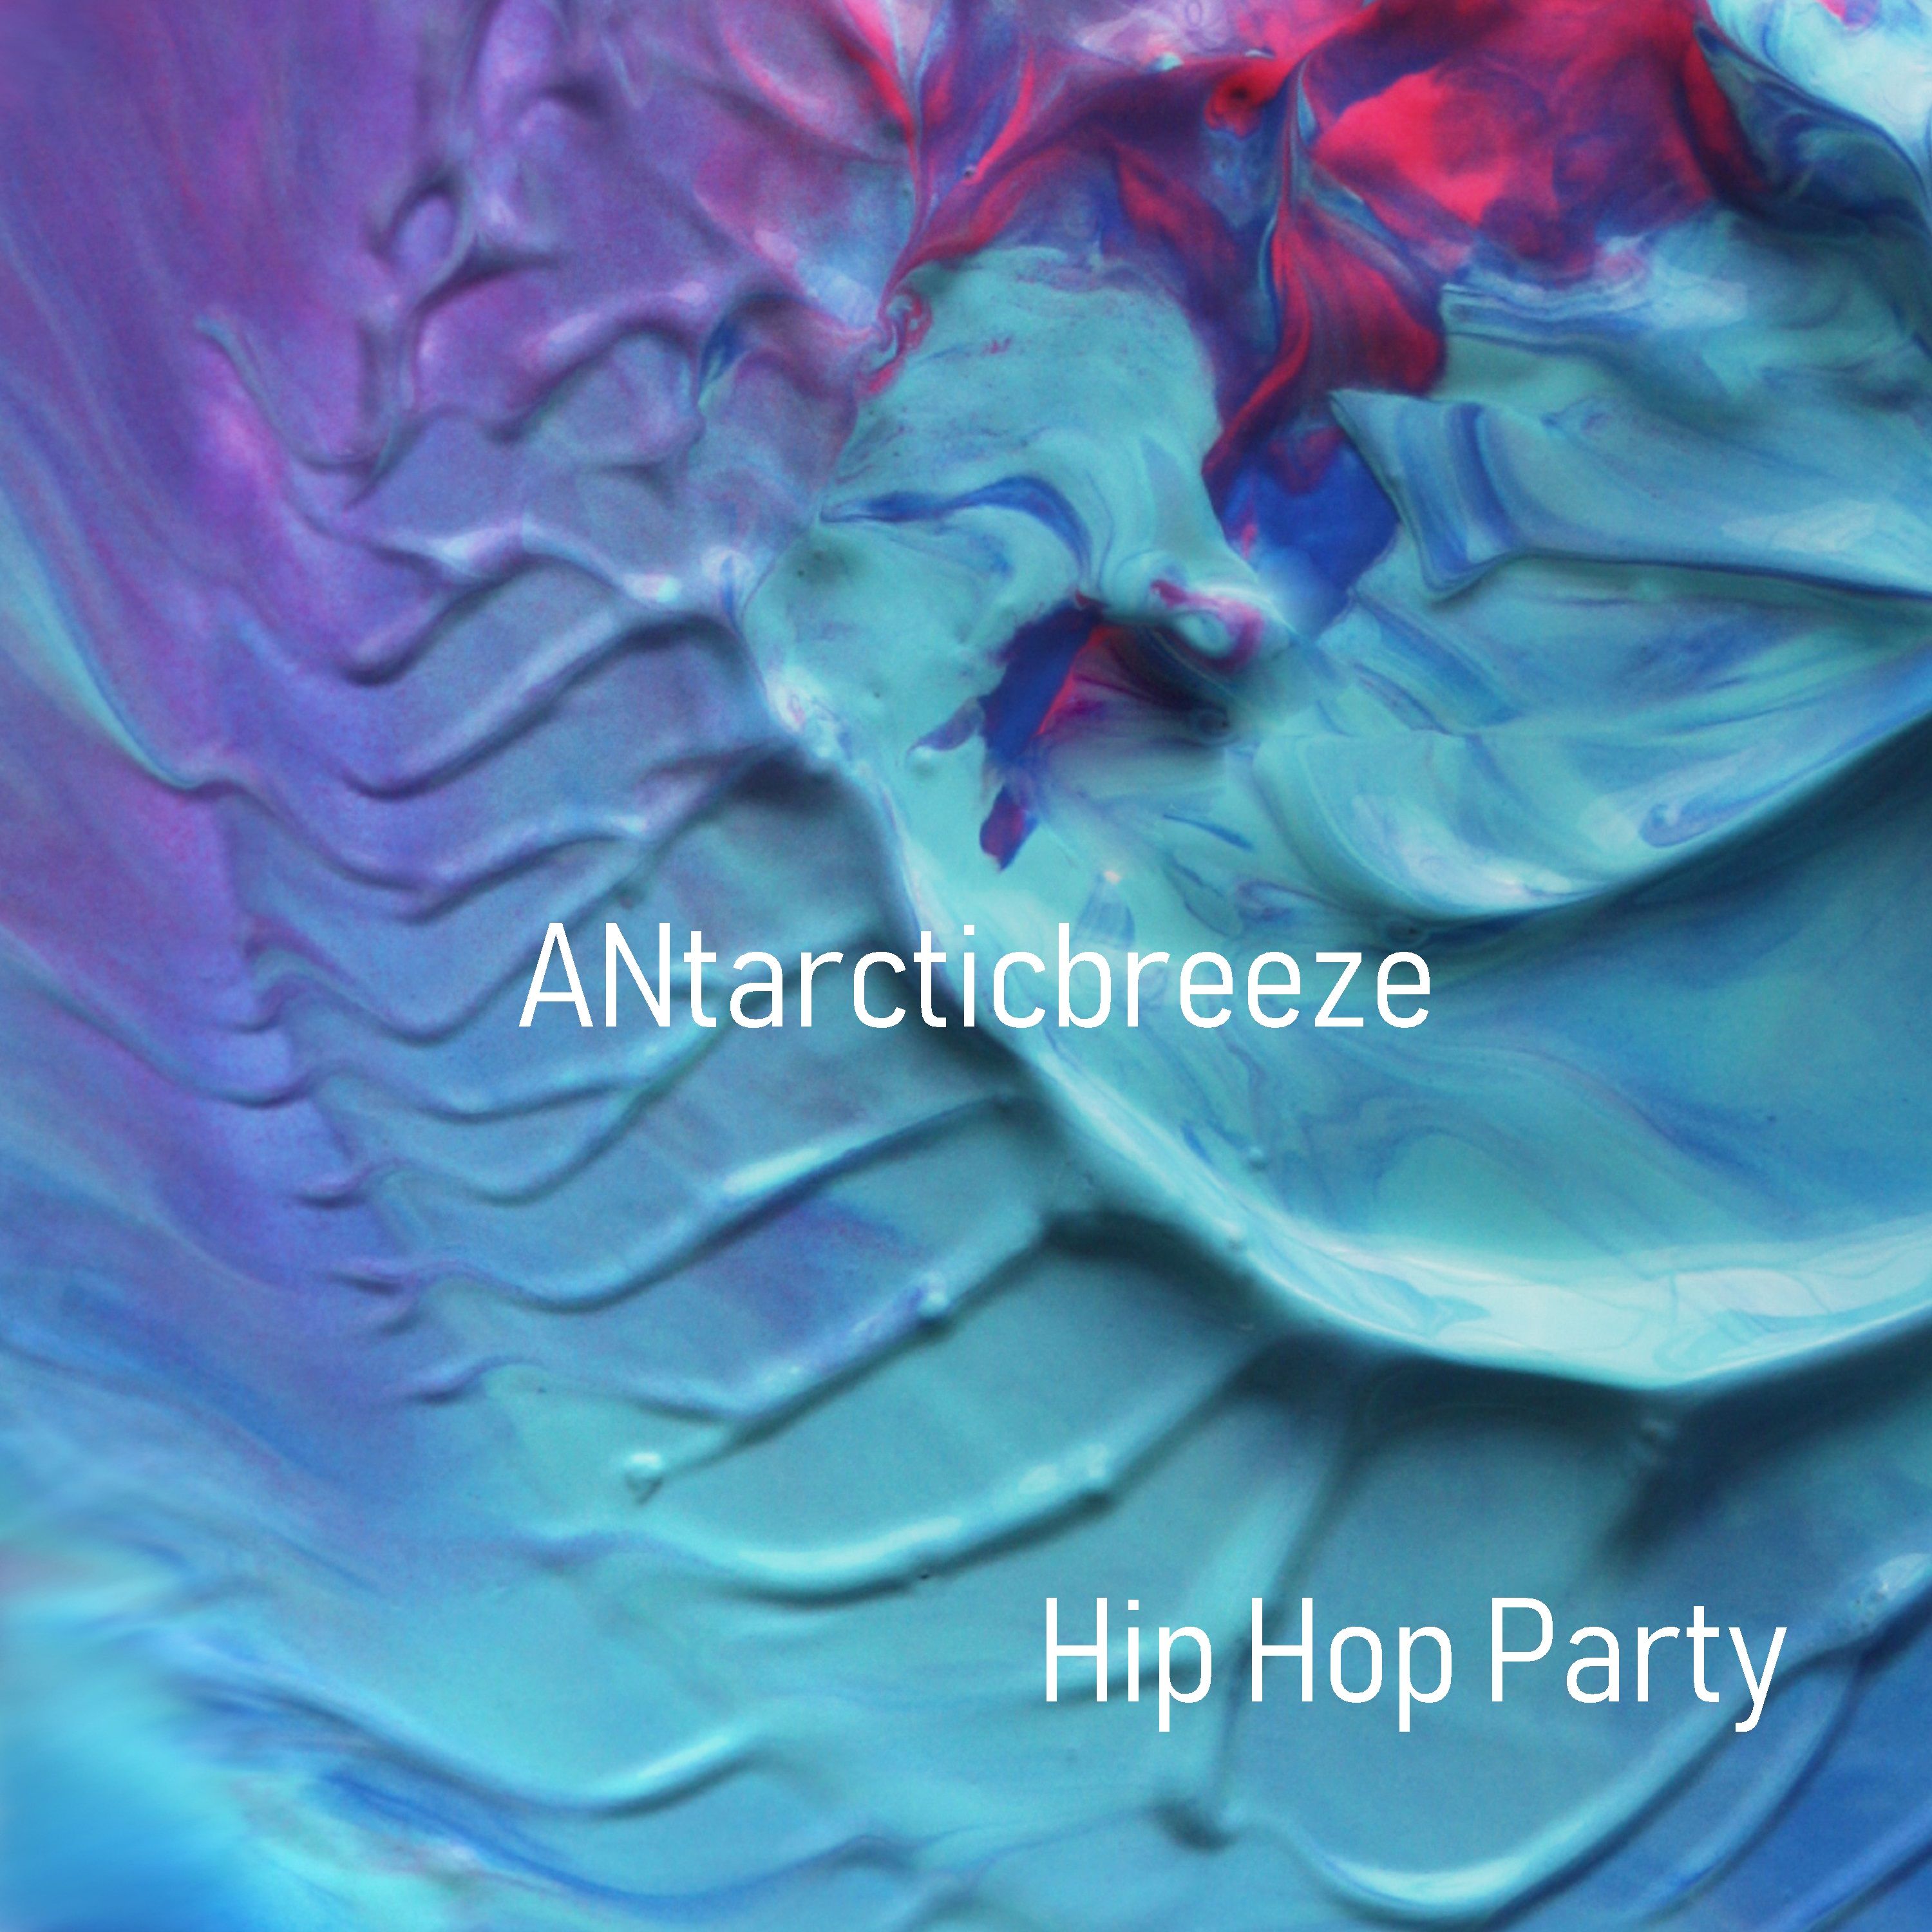 Budata Hip Hop Party - Positive (Unlimit Use Music) by ANtarcticbreeze